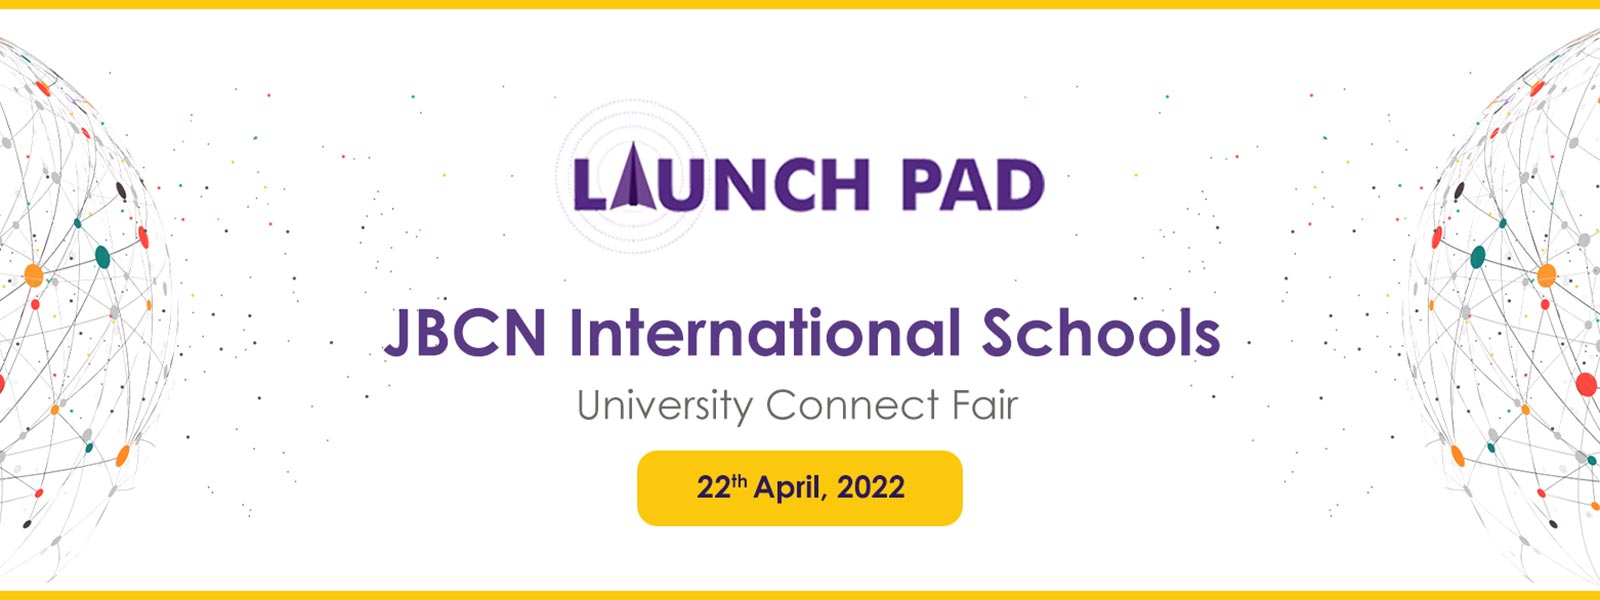 Launch Pad JBCN International Schools University Connect fair banner